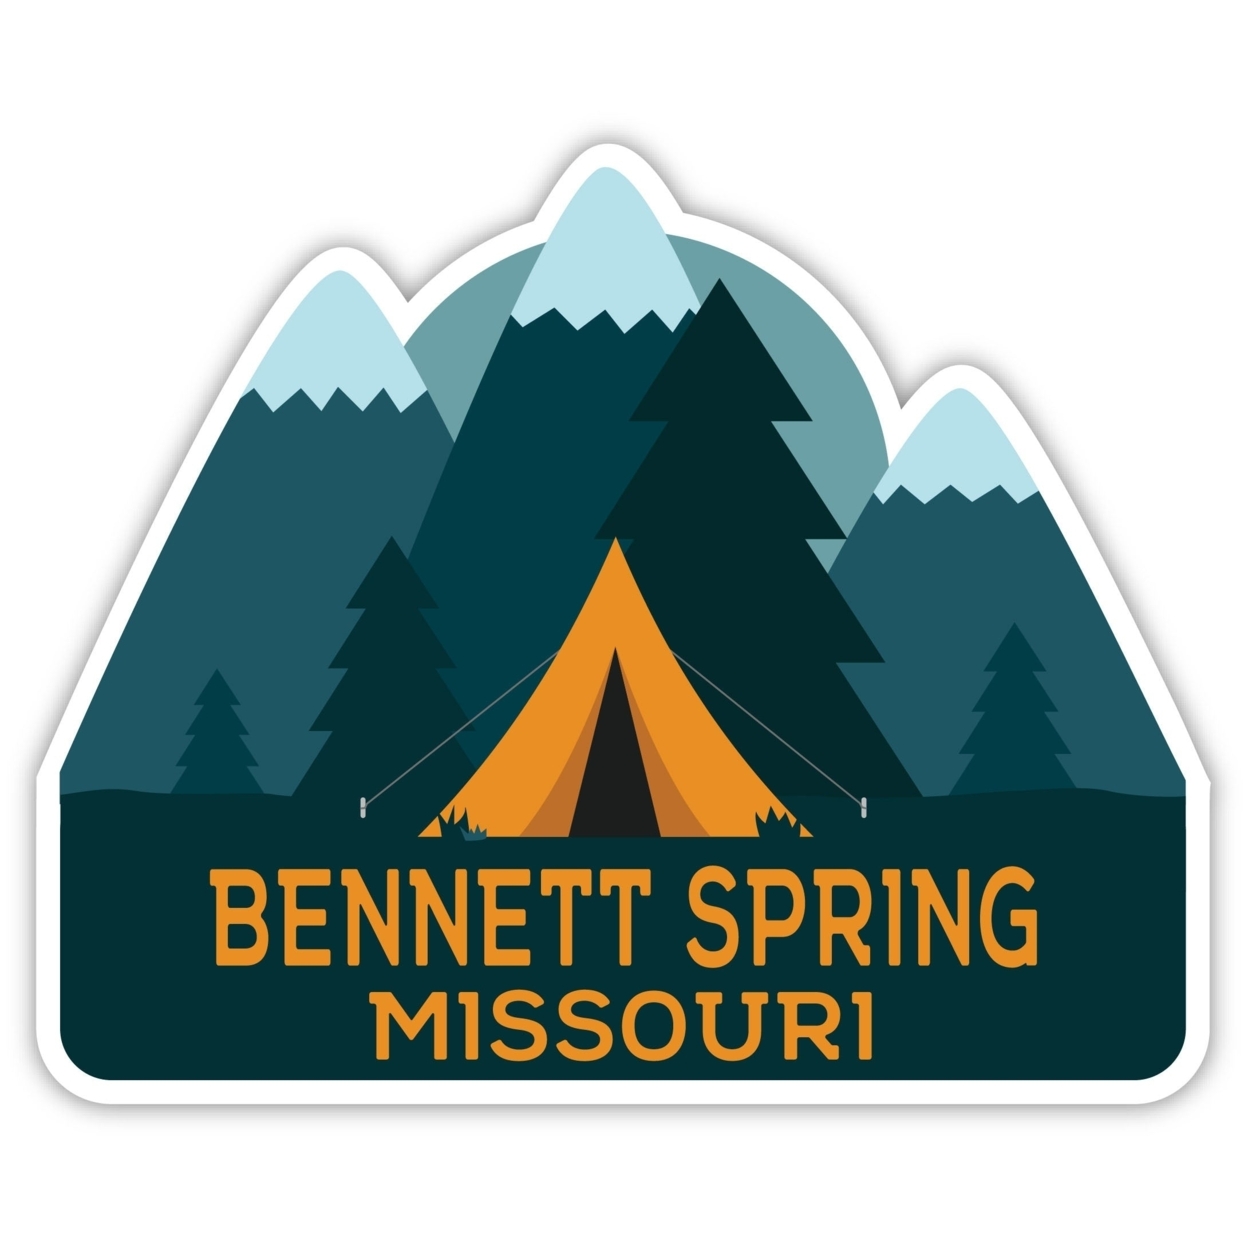 Bennett Spring Missouri Souvenir Decorative Stickers (Choose Theme And Size) - Single Unit, 2-Inch, Tent